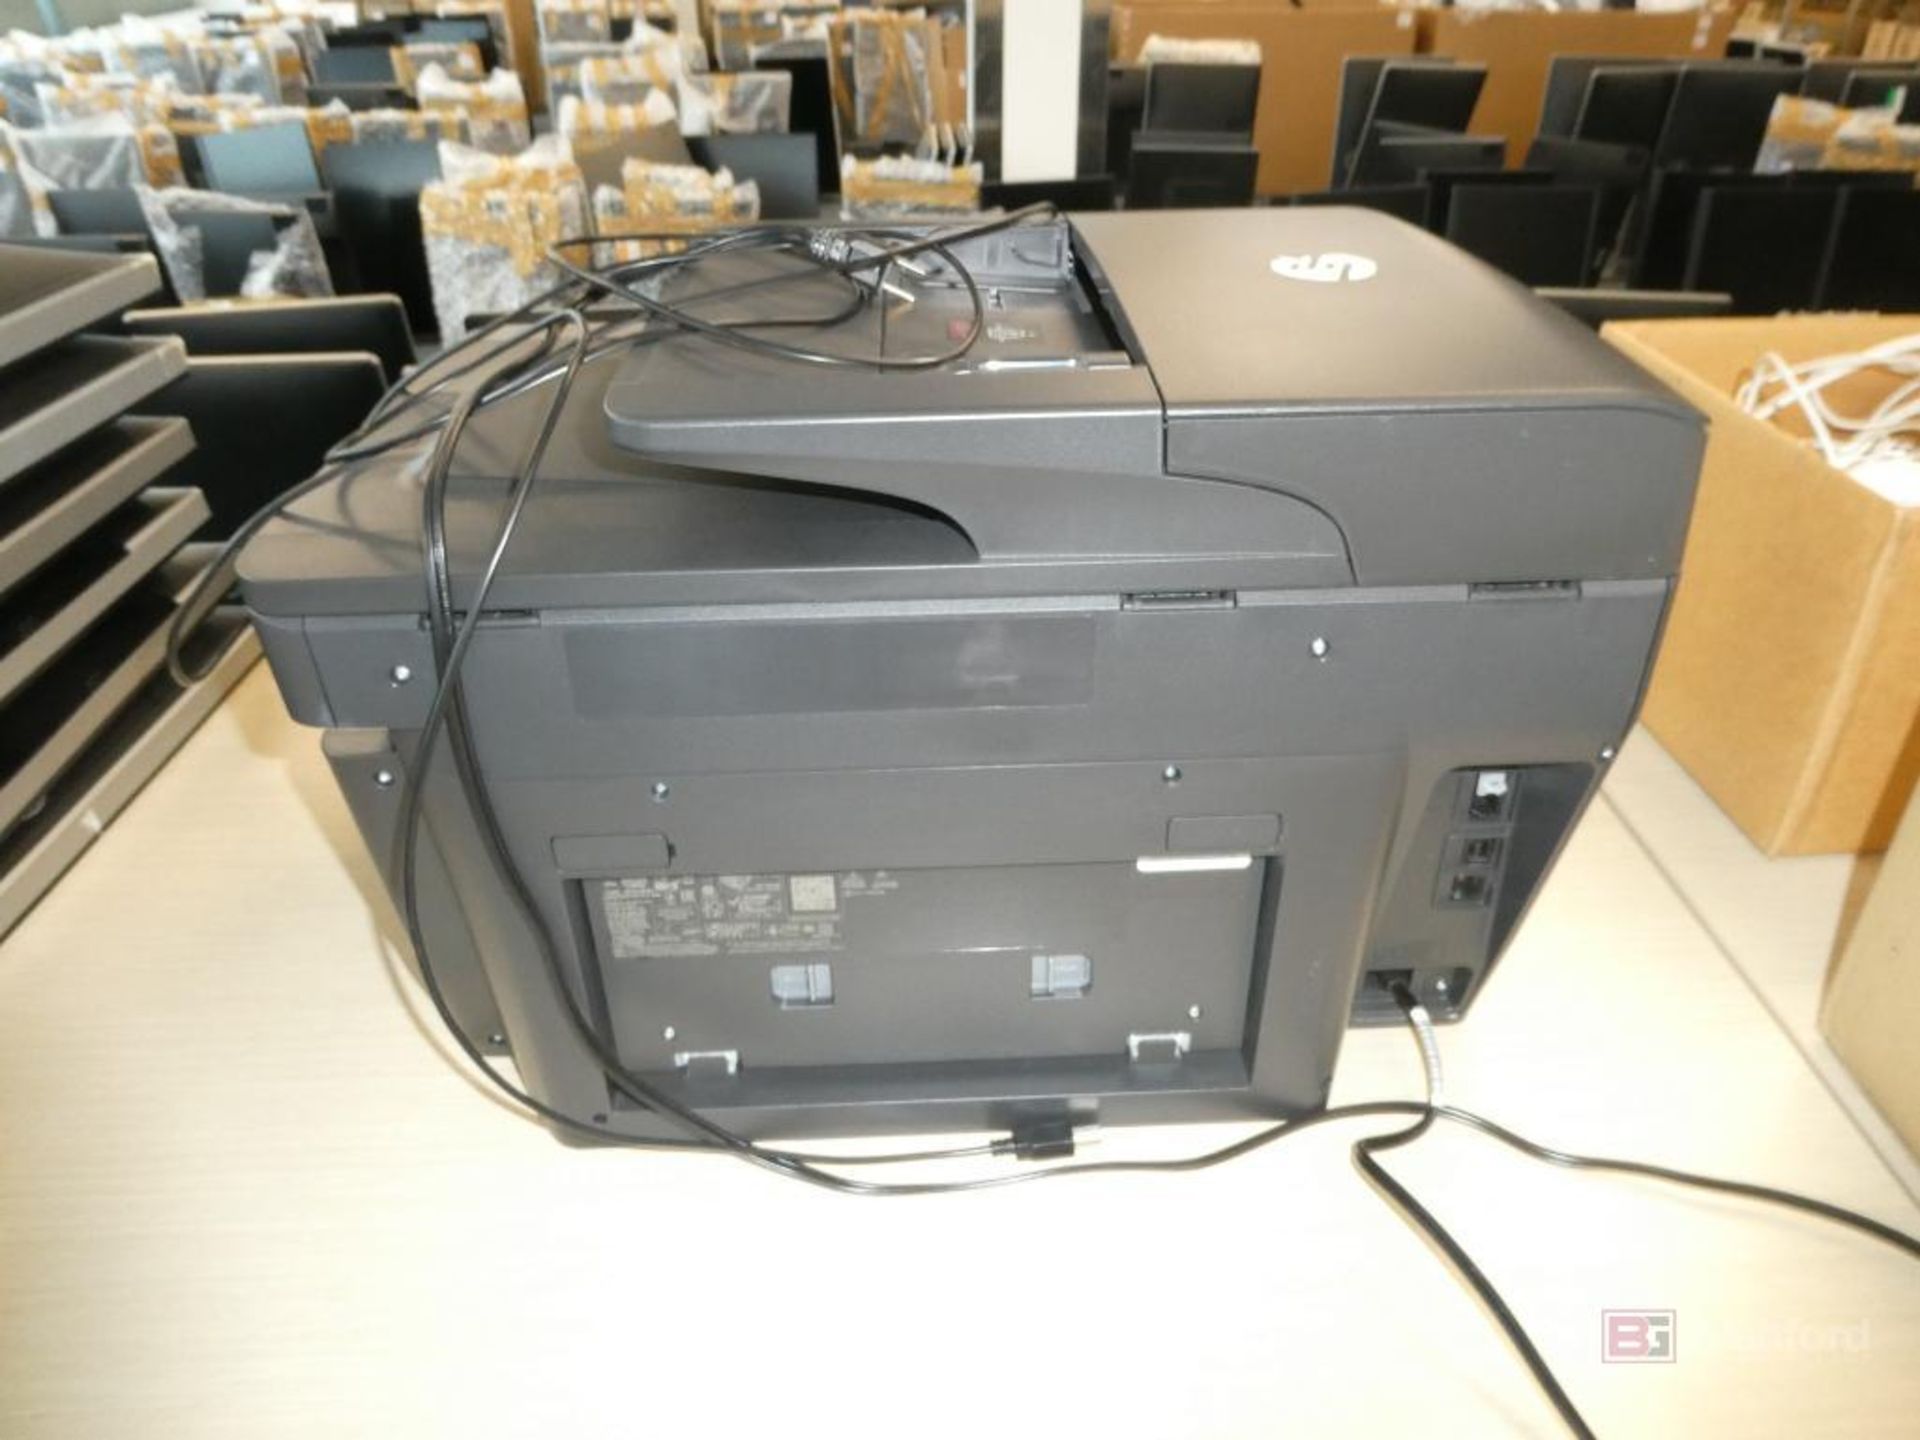 HP Officejet Pro 8720, Wireless Printer/Scanner/Copy/Fax/Web Machine - Image 2 of 3